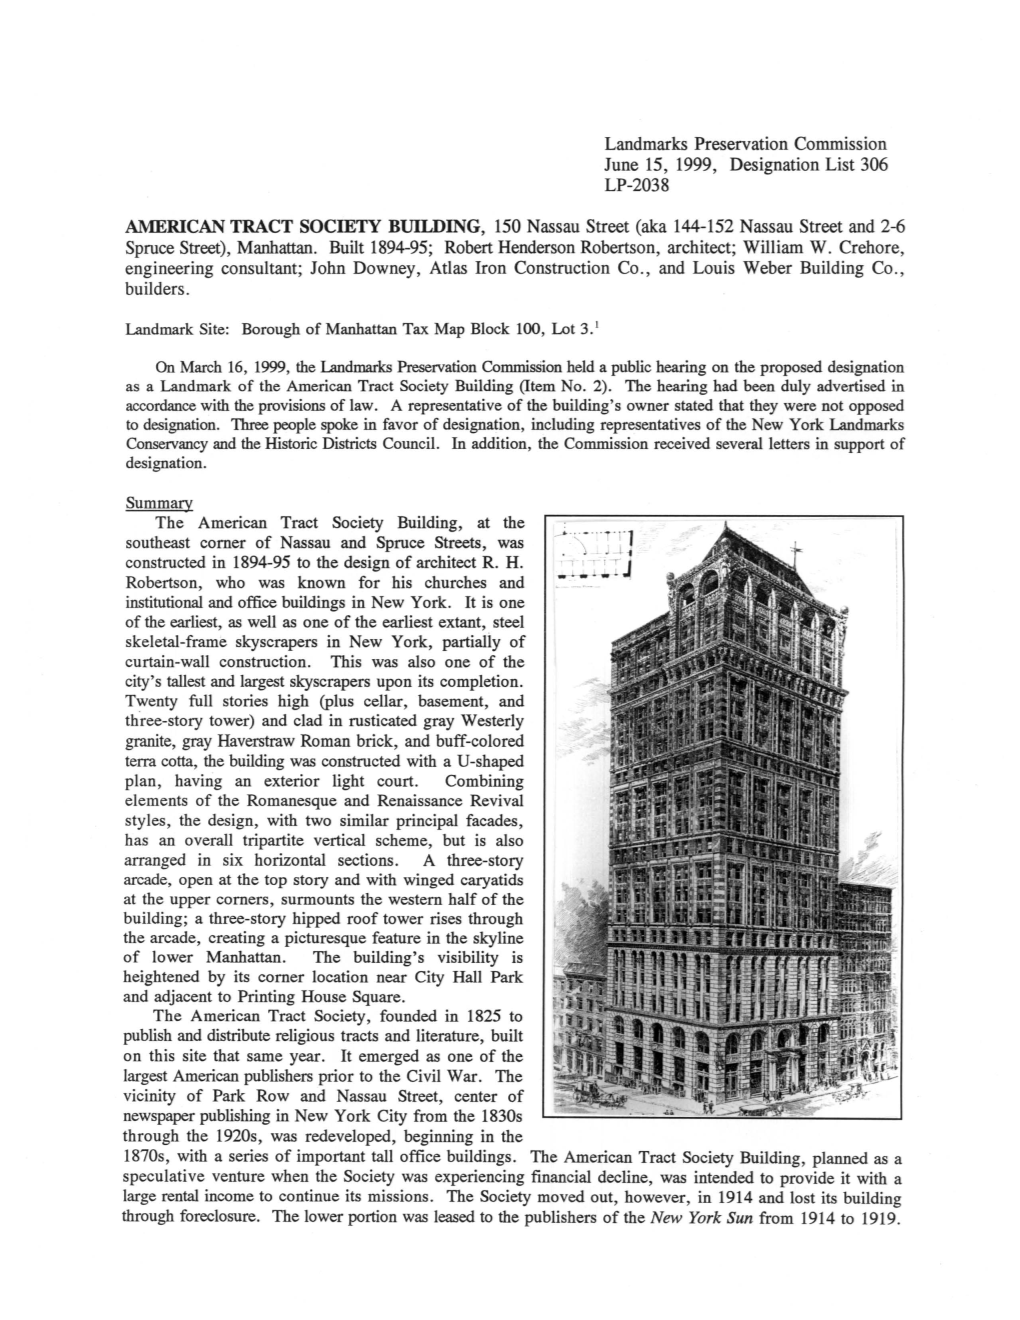 AMERICAN TRACT SOCIETY BUILDING, 150 Nassau Street (Aka 144-152 Nassau Street and 2-6 Spruce Street), Manhattan